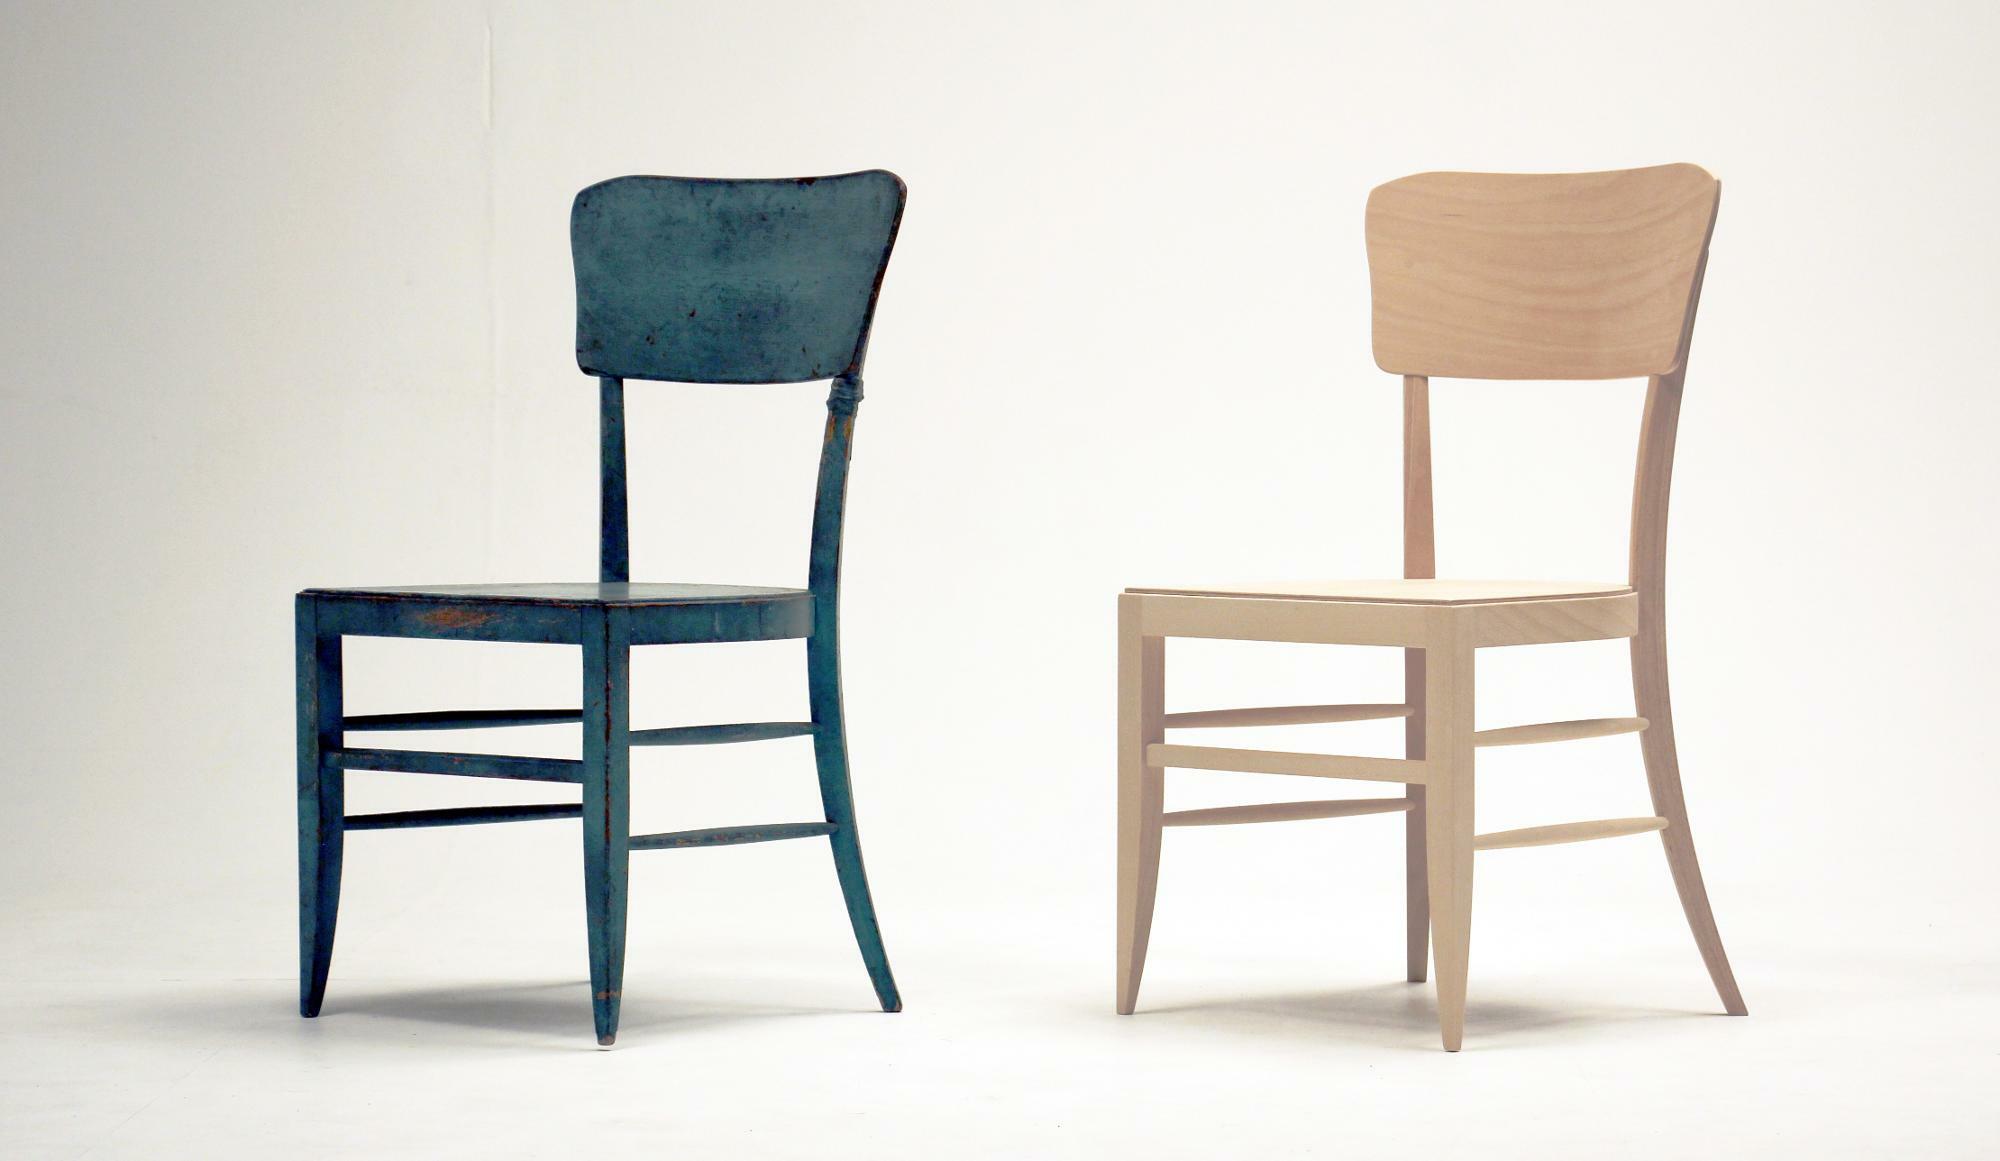  画像：左 「試作品 緑の椅子」 達磨寺所蔵・右「復刻 緑の椅子」